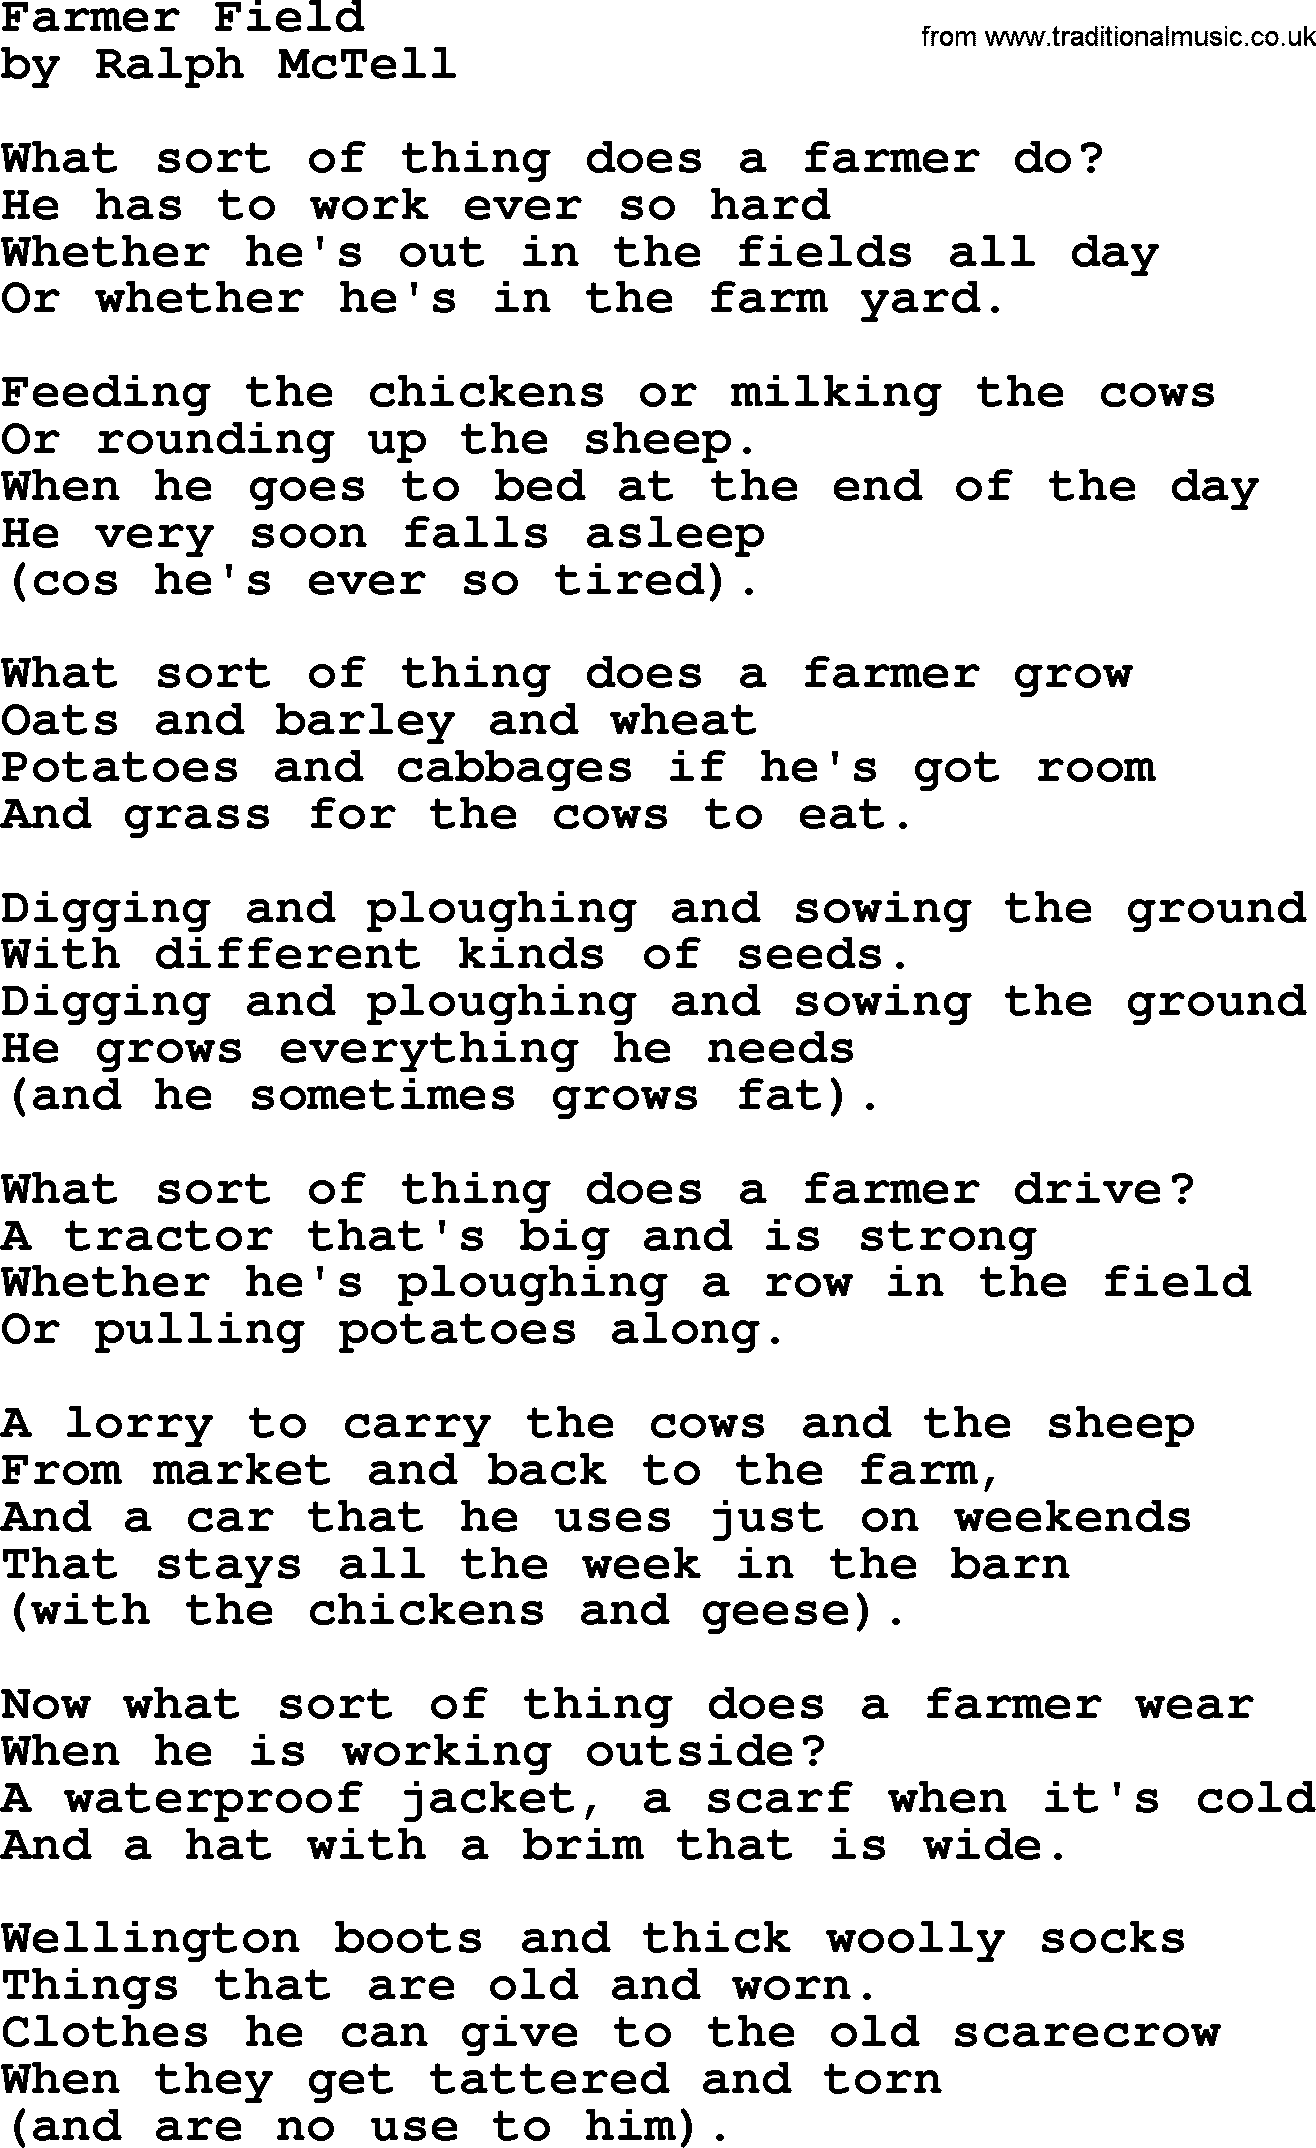 Ralph McTell Song: Farmer Field, lyrics